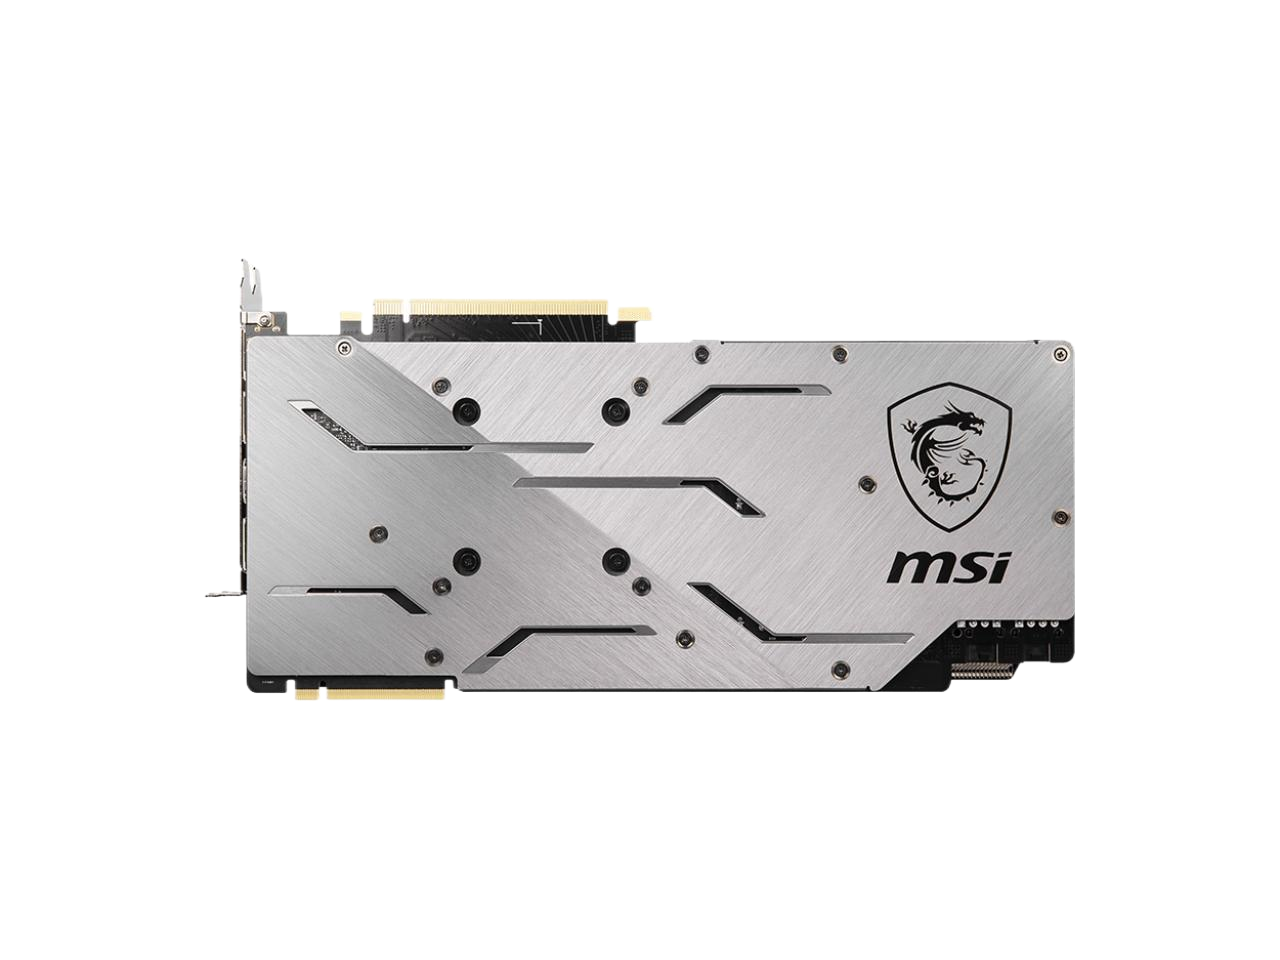 MSI GeForce RTX 2070 GAMING X 8GB GDDR6 PCI Express 3.0 x16 Video Card